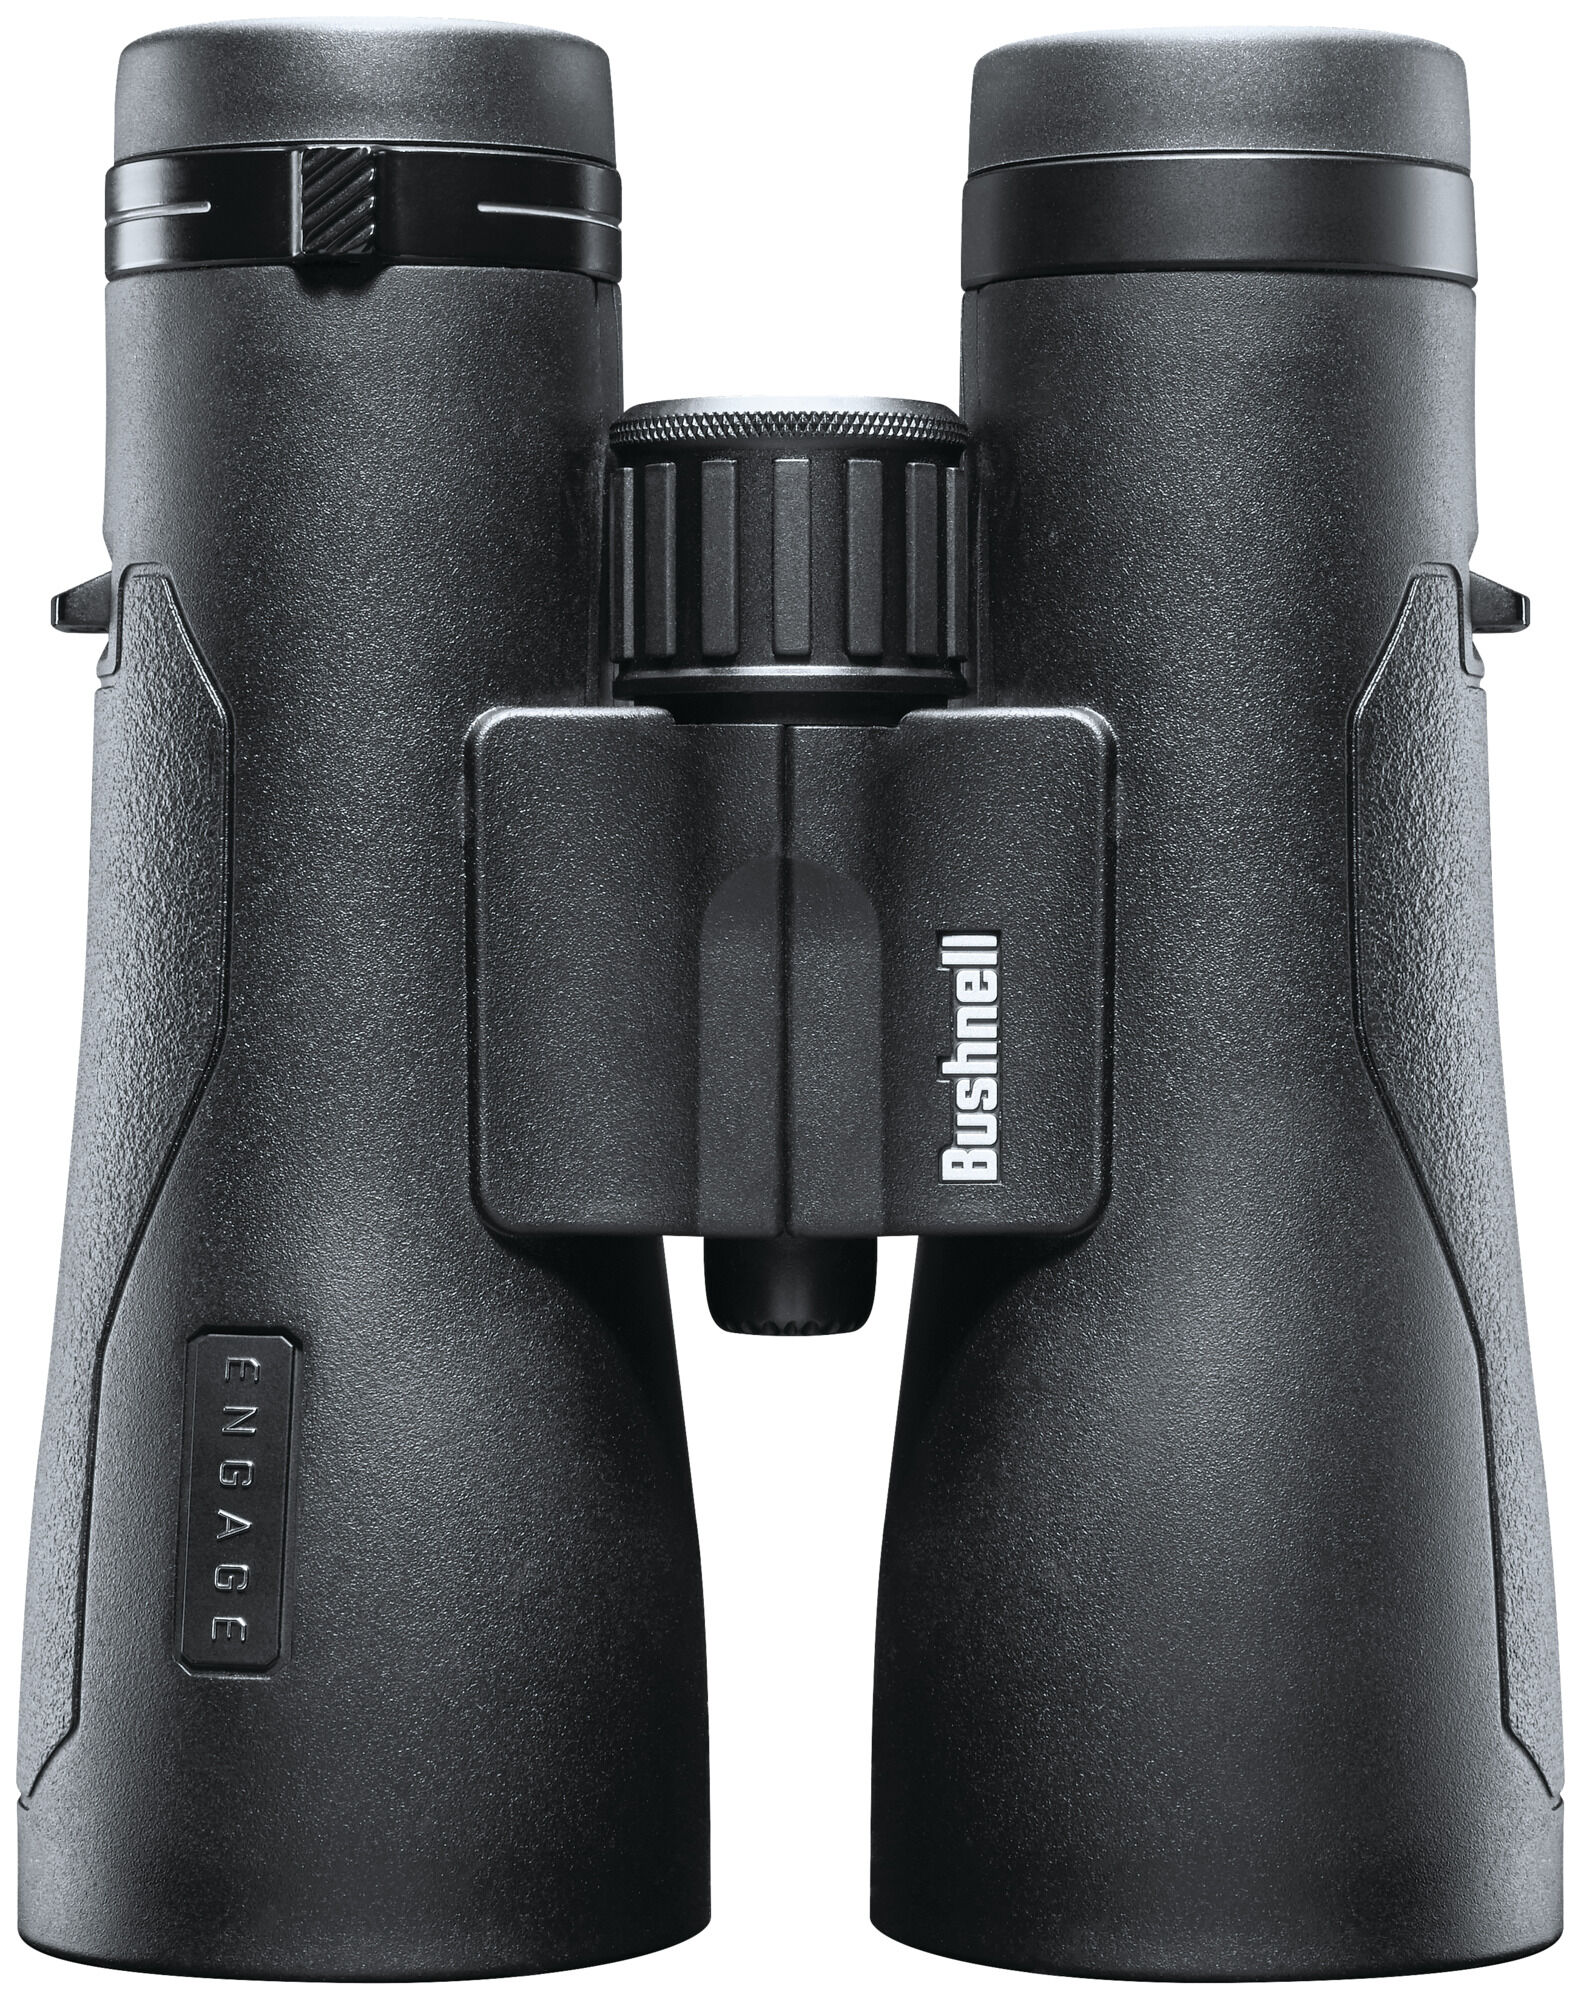 Engage DX Hunting Binoculars, 12x50 Magnfication | Bushnell